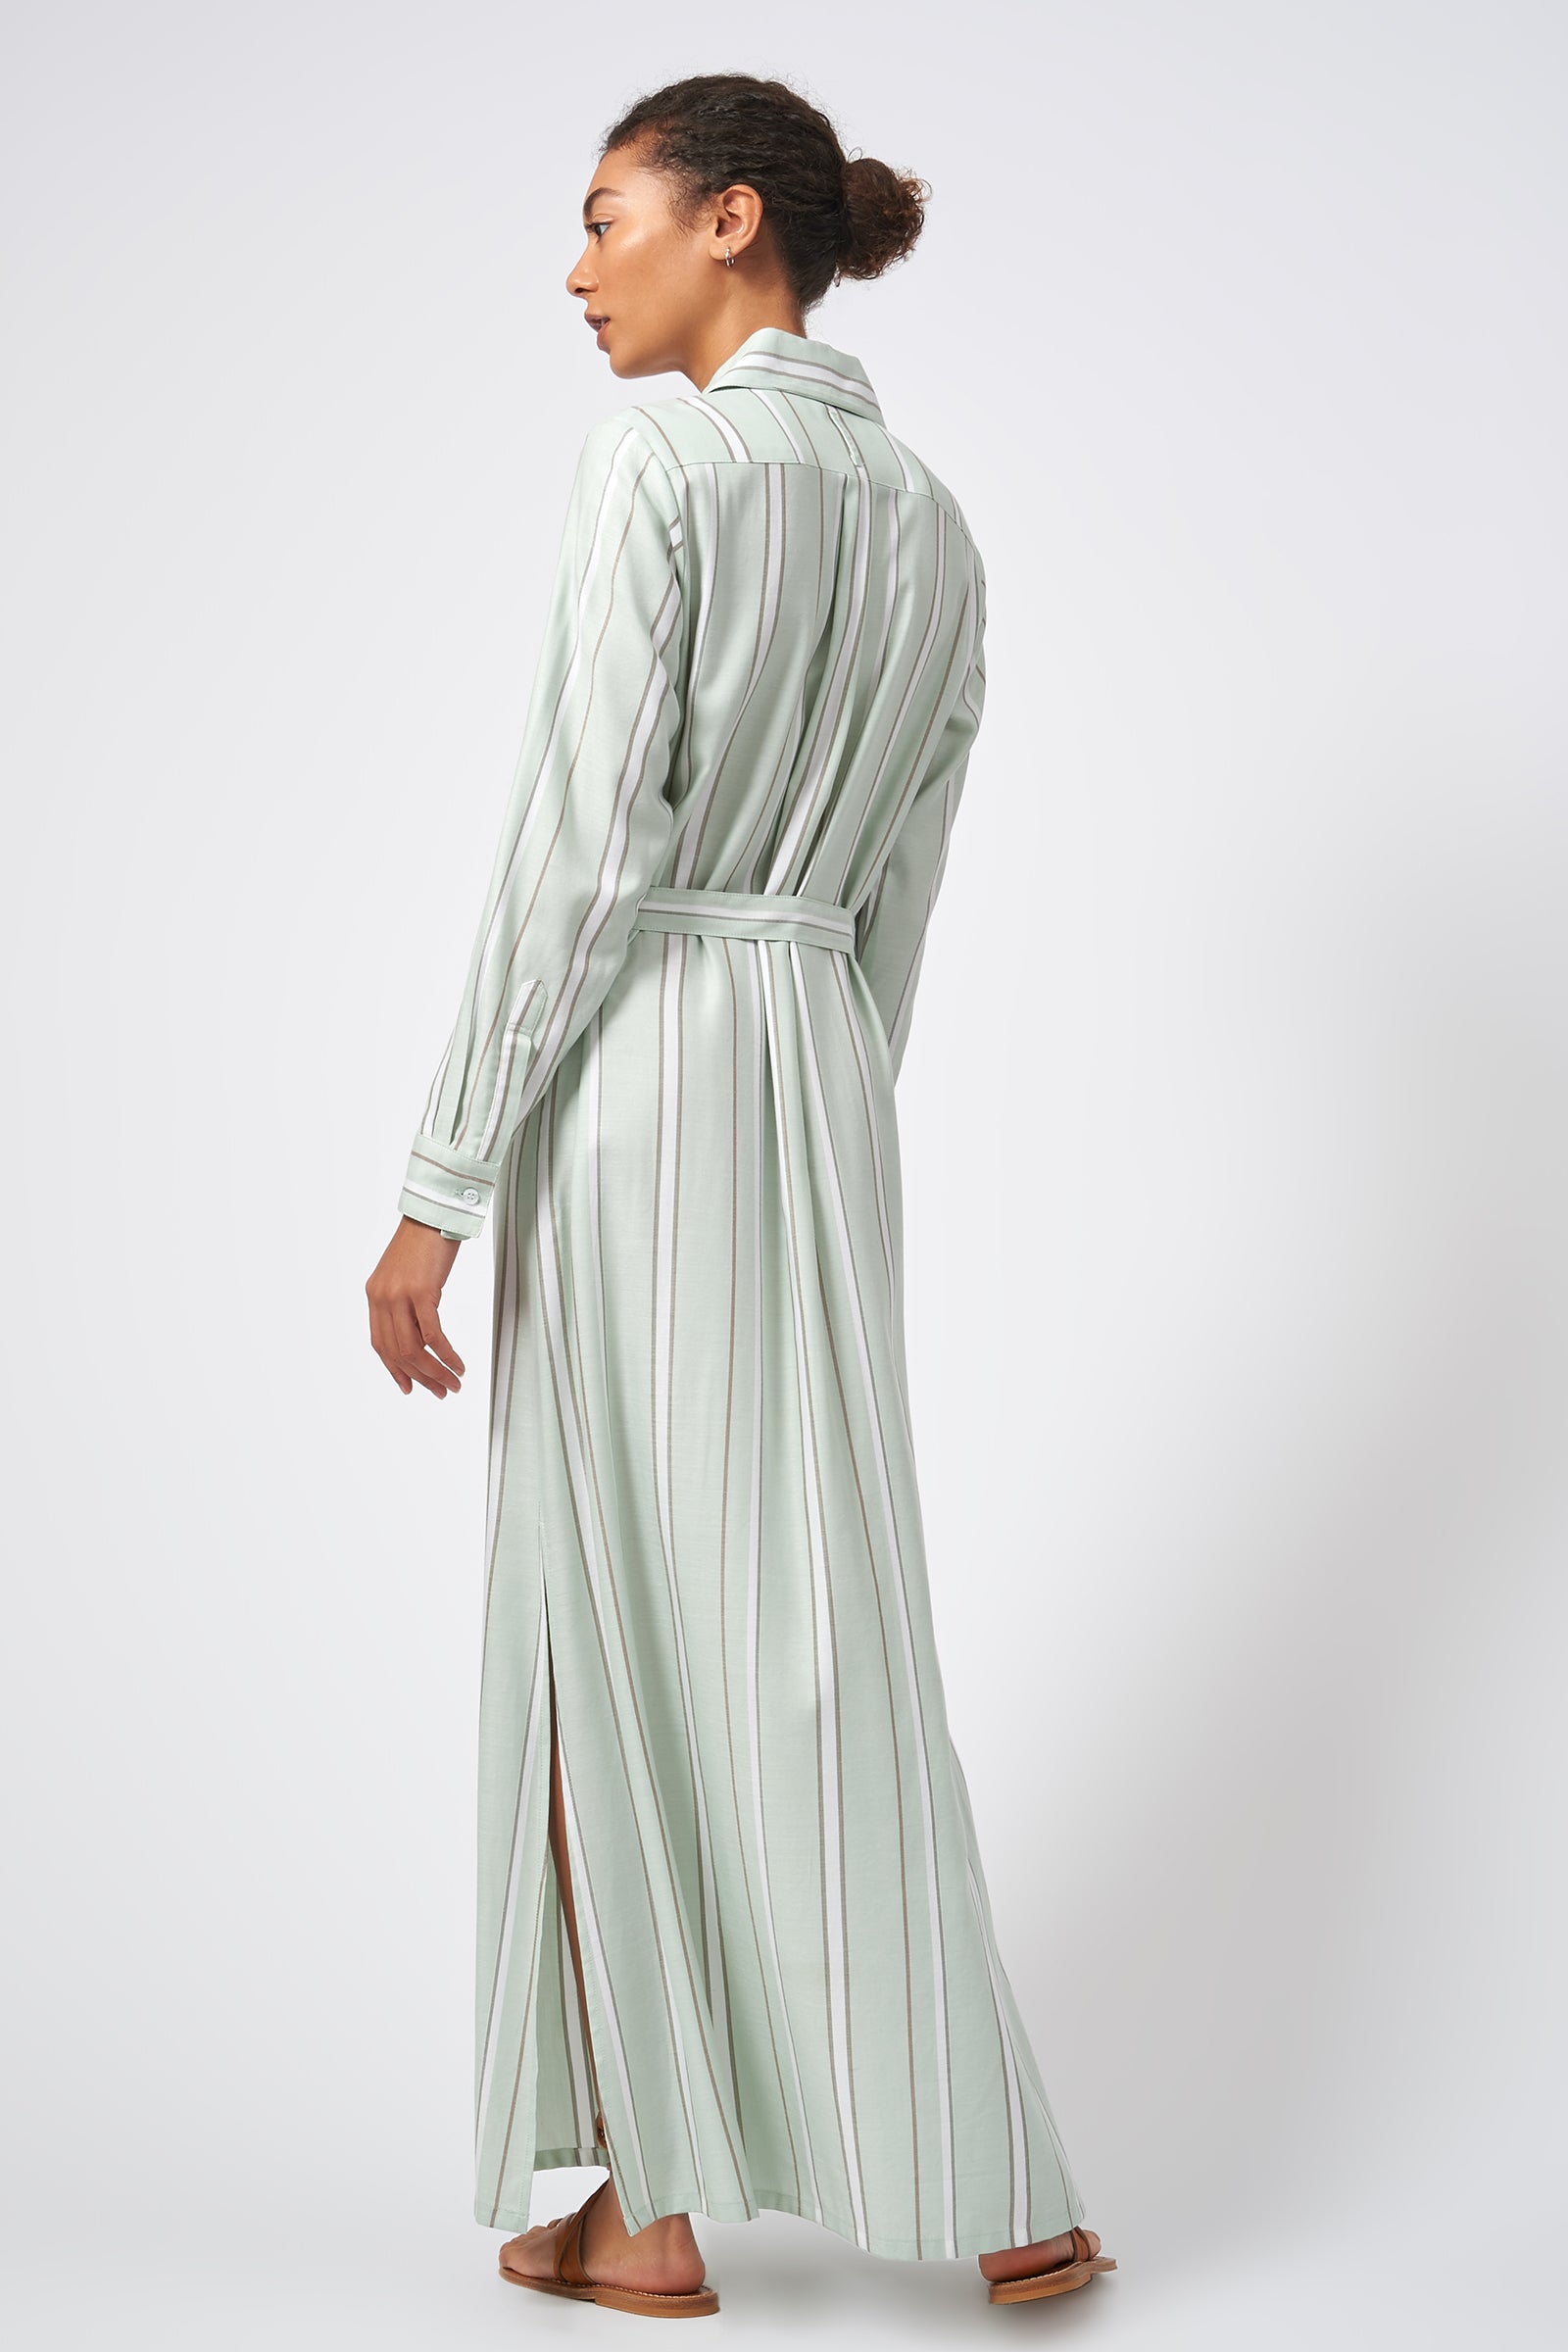 Kal Rieman Stripe Maxi Shirt Dress Mint  On Model  Front View Full